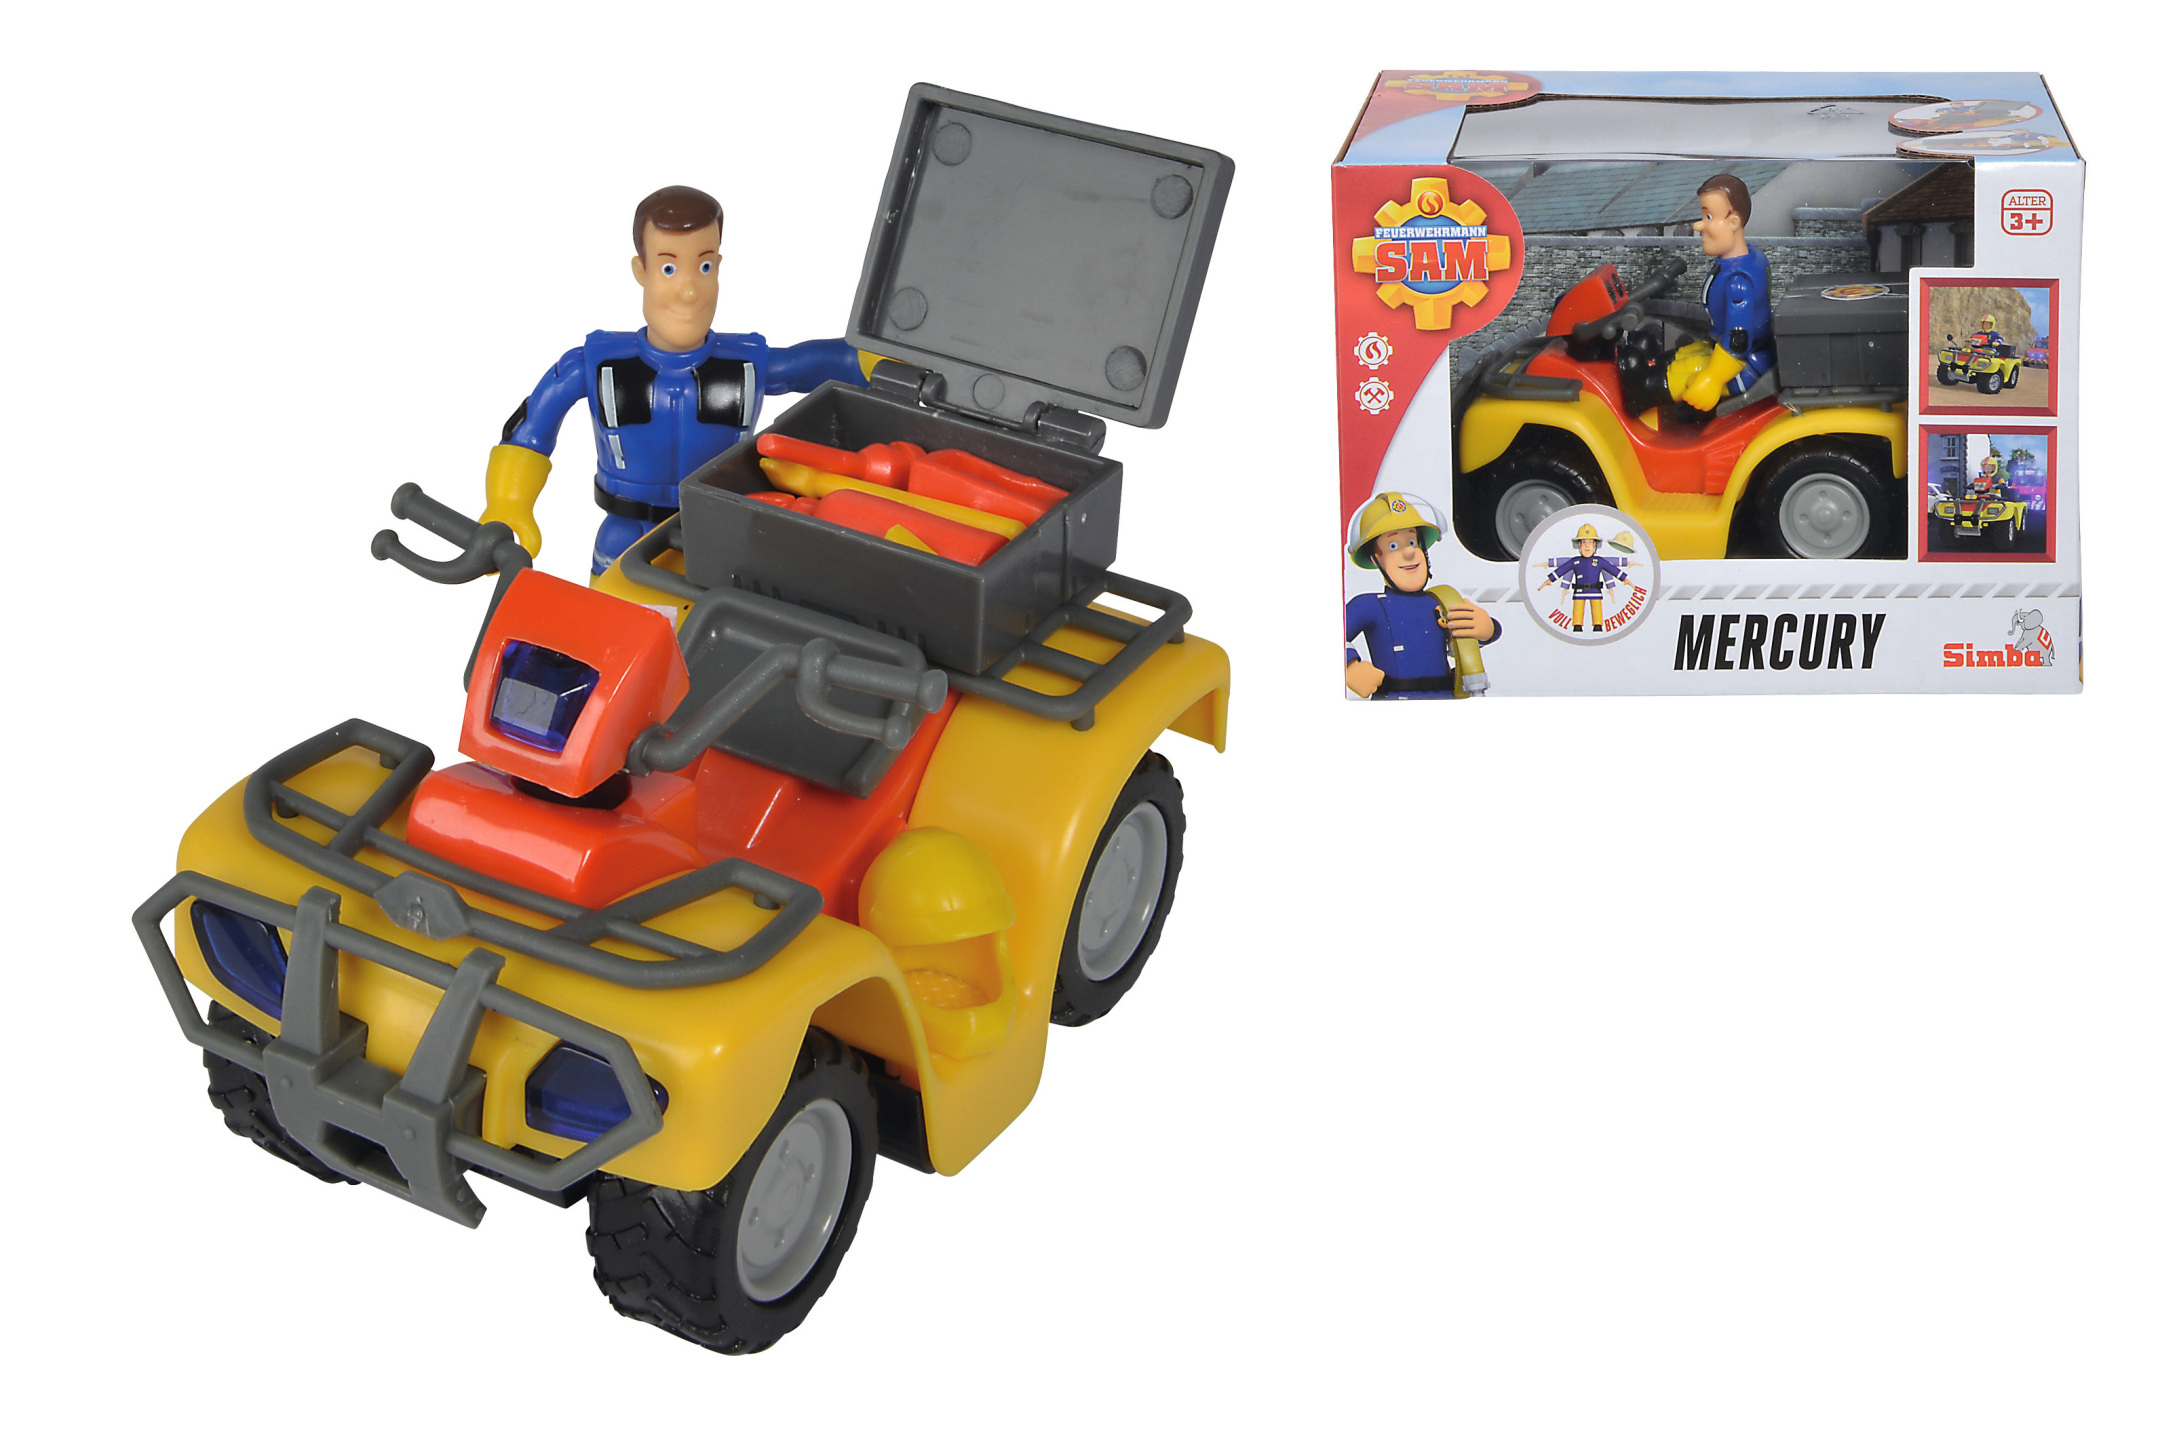 SIMBA TOYS Sam Mehrfarbig Mercury-Quad mit Spielzeugquad Figur